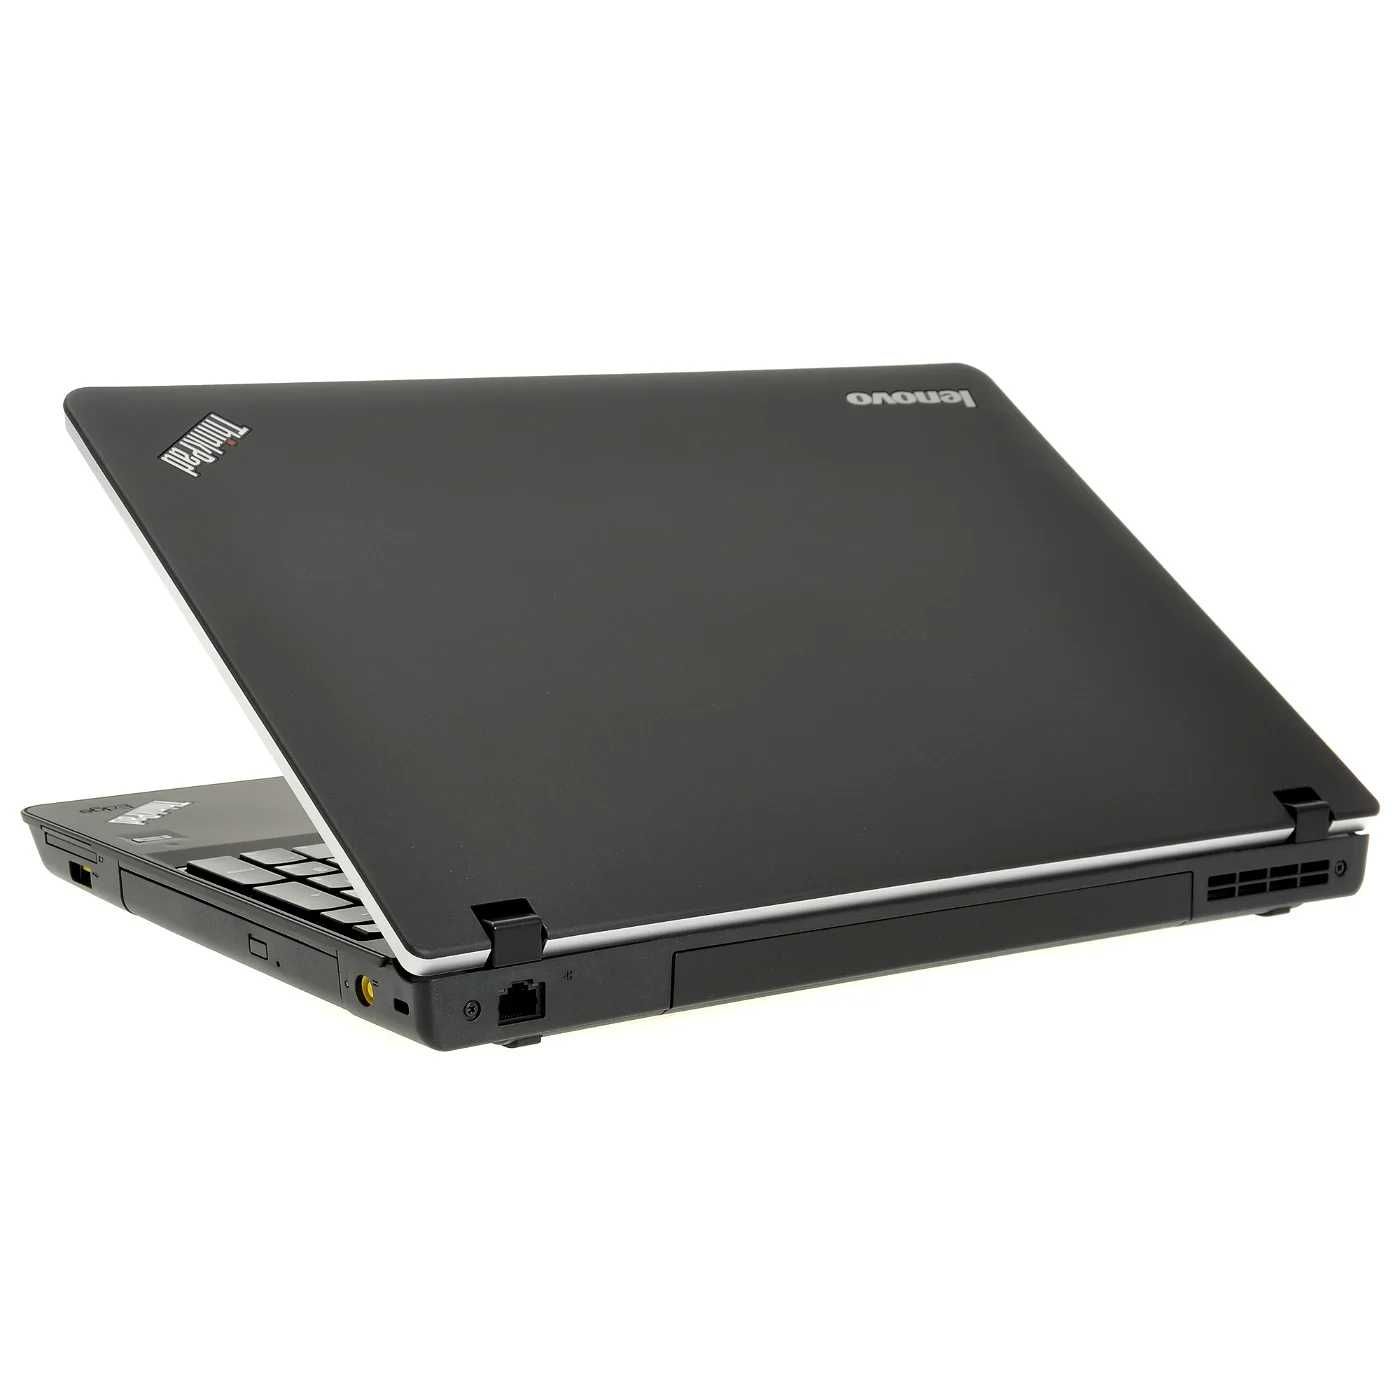 Lenovo ThinkPad Edge E520 i5 2450, 15.6 "LED/8Gb DDR3/HD6630M 2GB